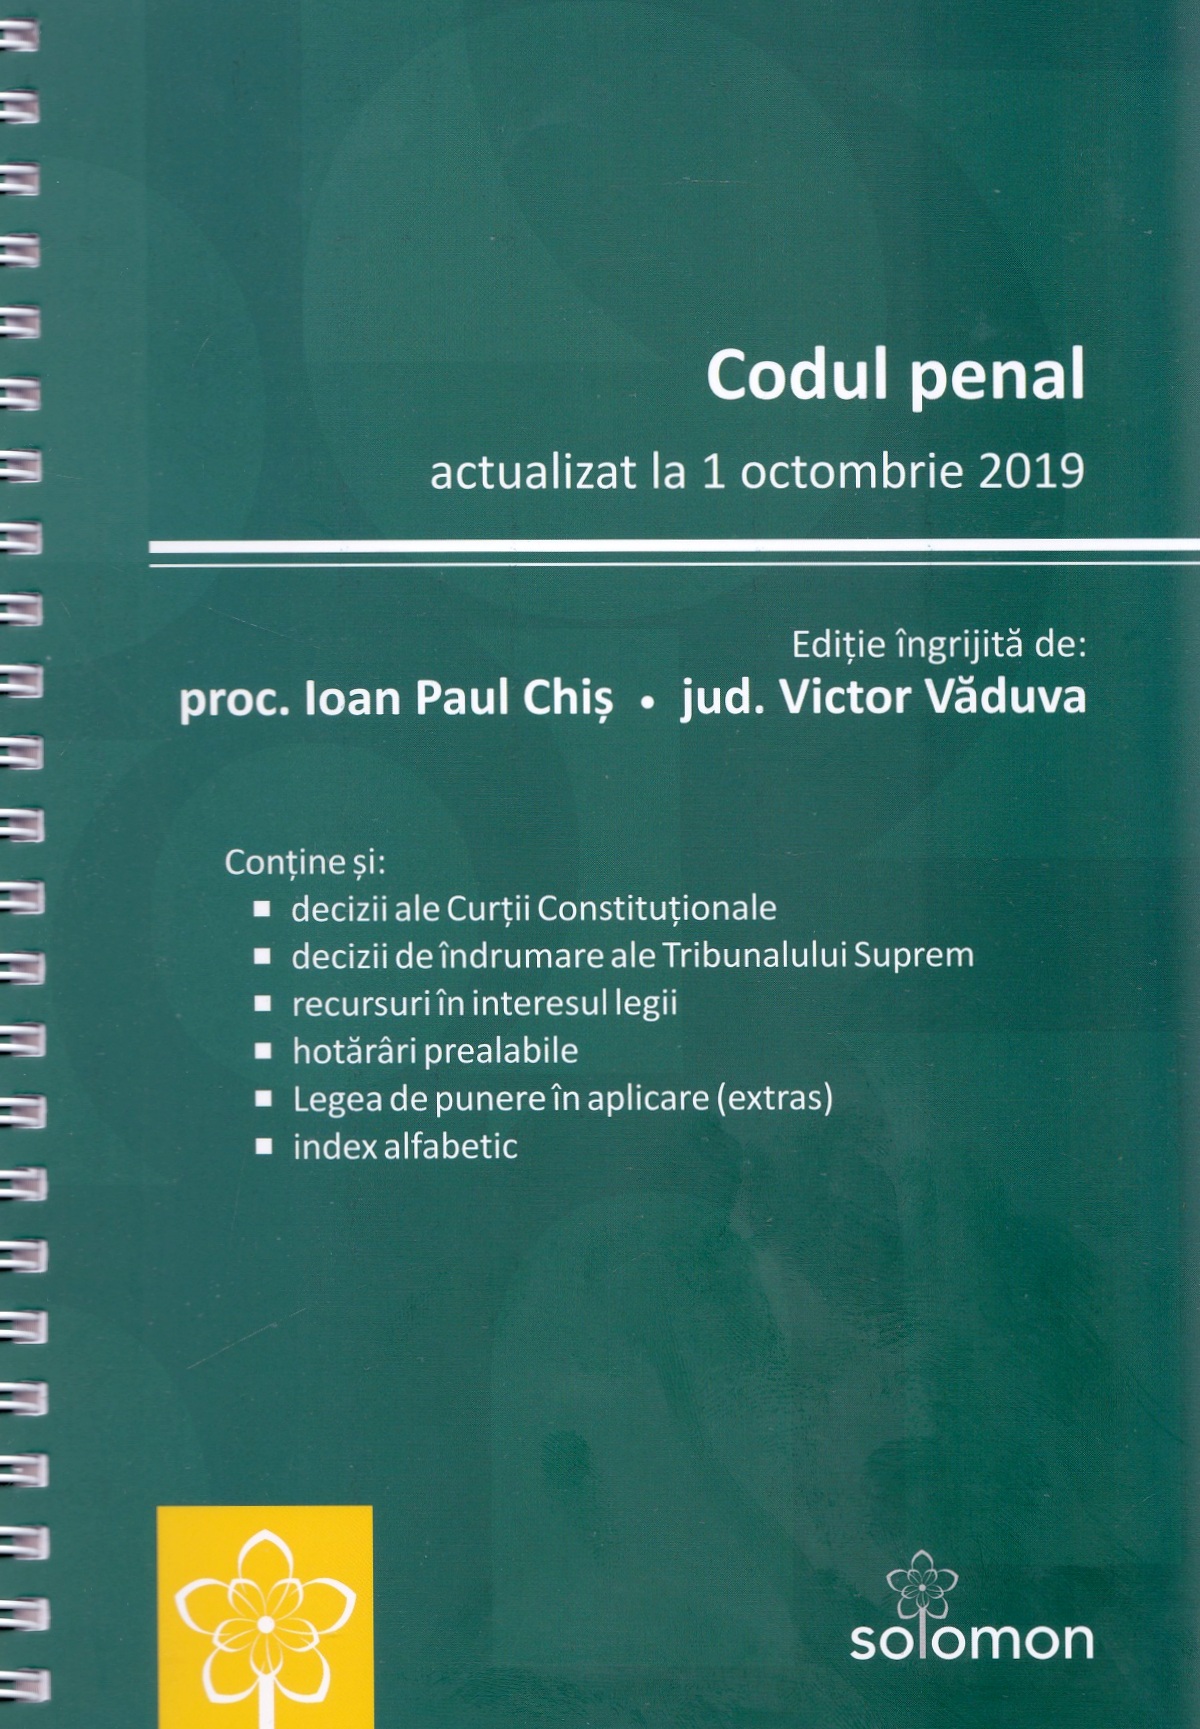 Codul penal Act. la 1 octombrie 2019